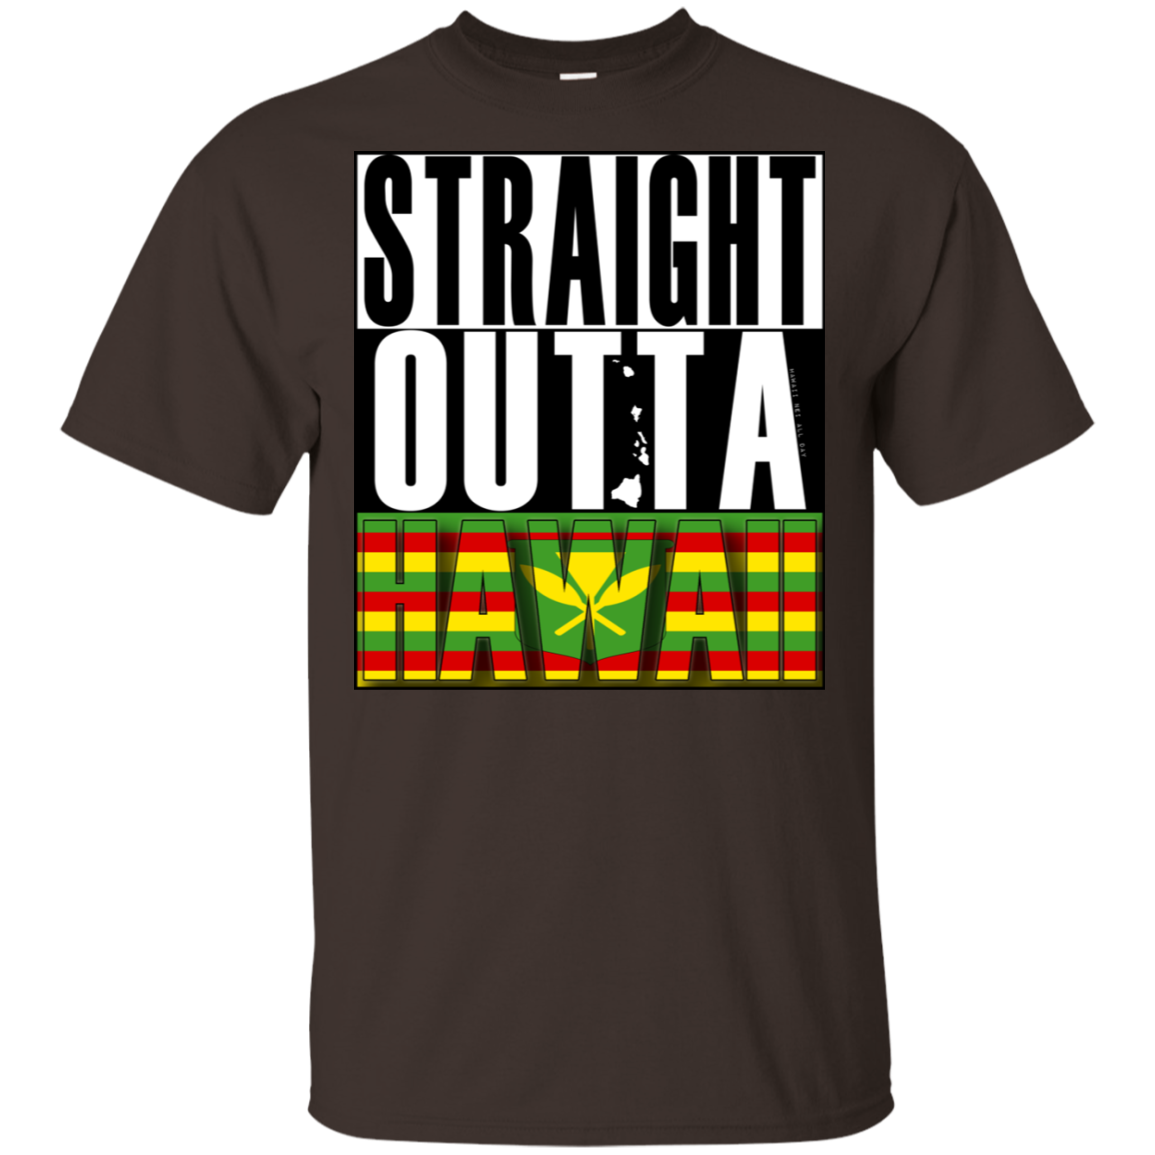 Straight Outta Hawaii(kanaka maoli) Ultra Cotton T-Shirt, T-Shirts, Hawaii Nei All Day